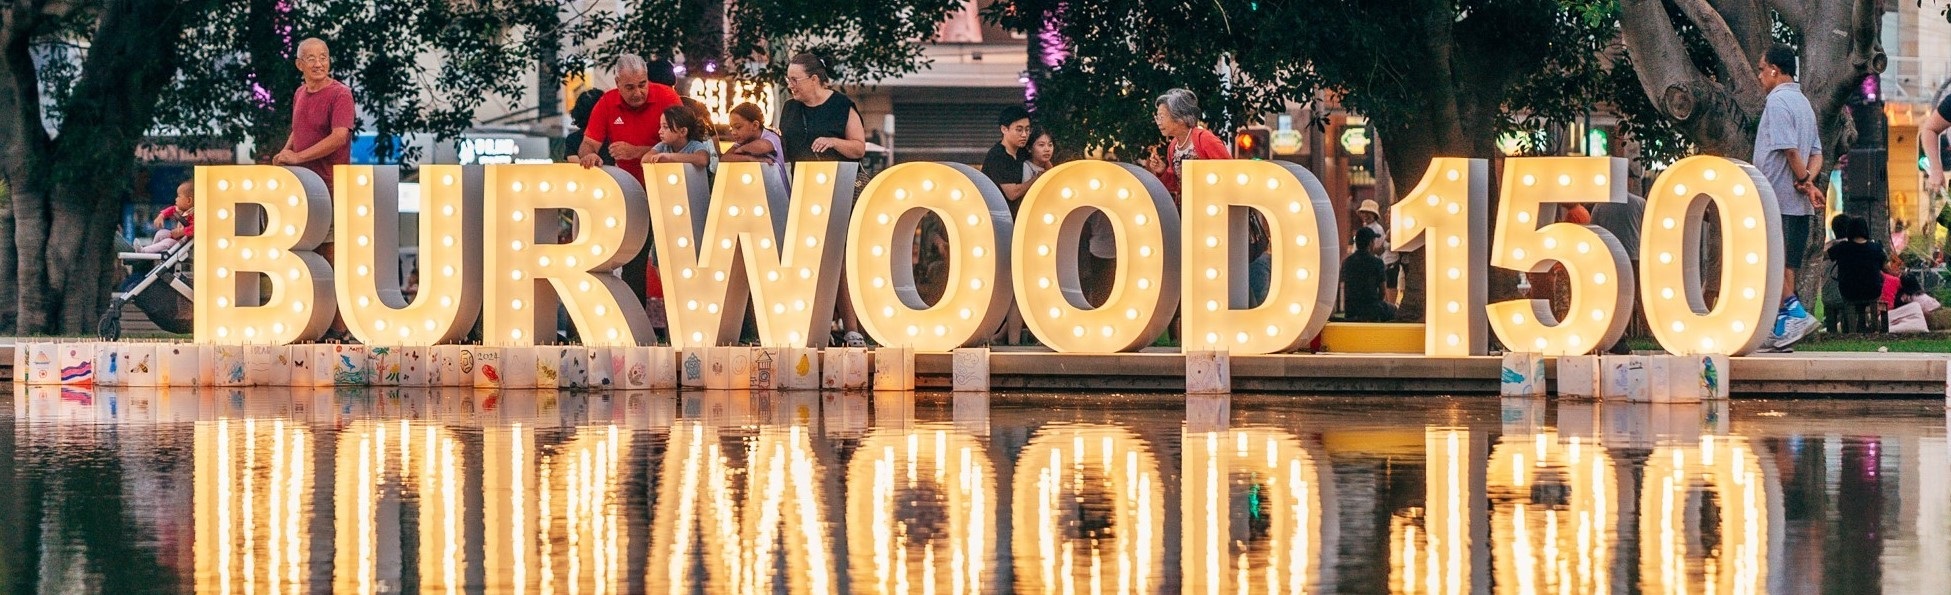 burwood 150 light up letters reflecting on pond